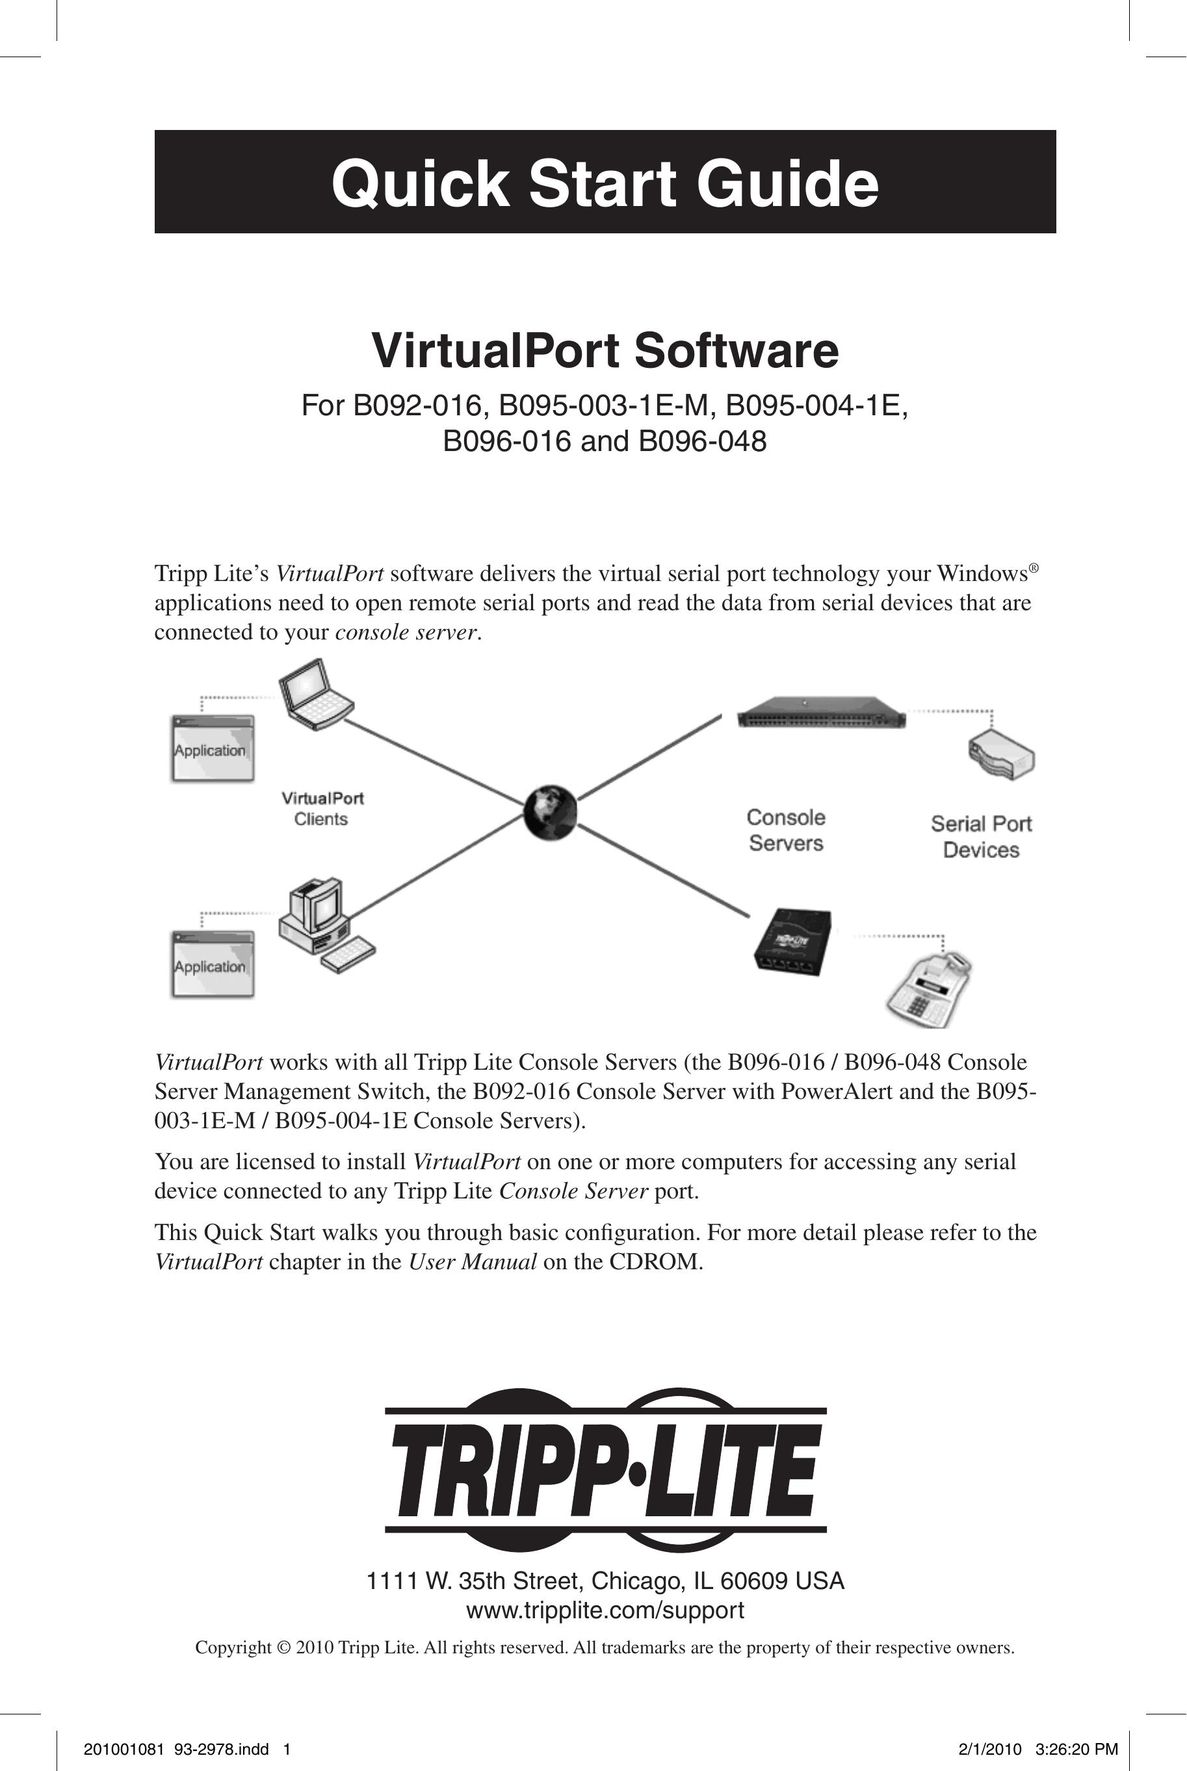 Tripp Lite B095-004-1E Network Card User Manual